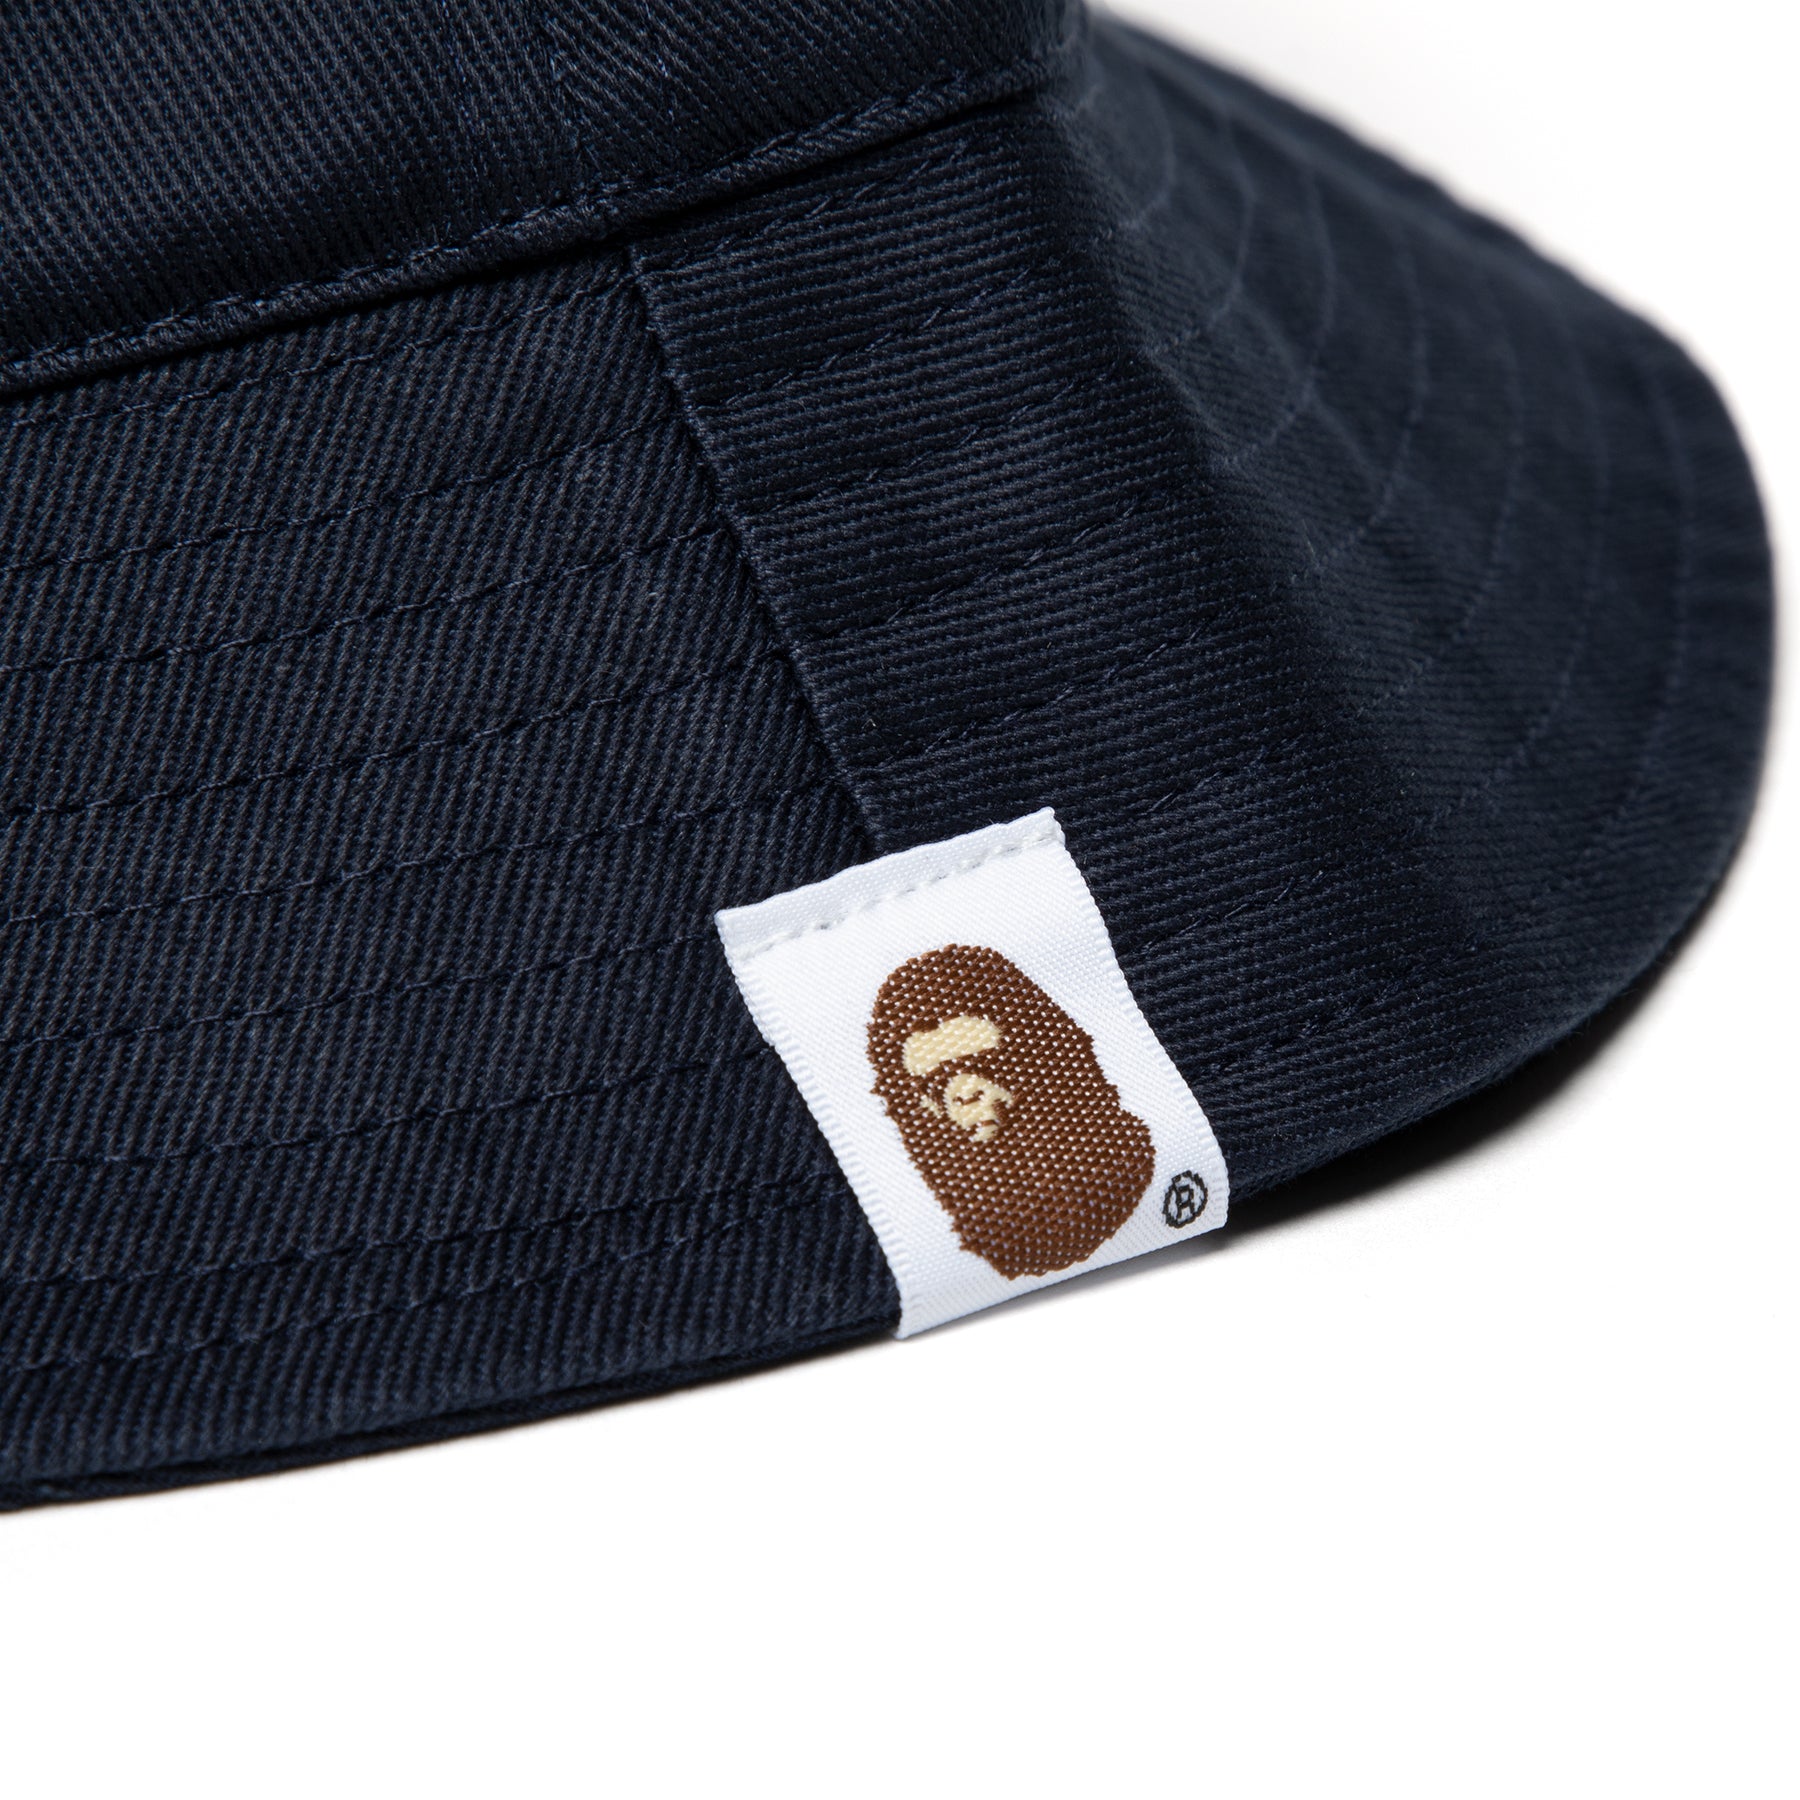 BAPE Ape Head One Point Bucket Hat Hat Black